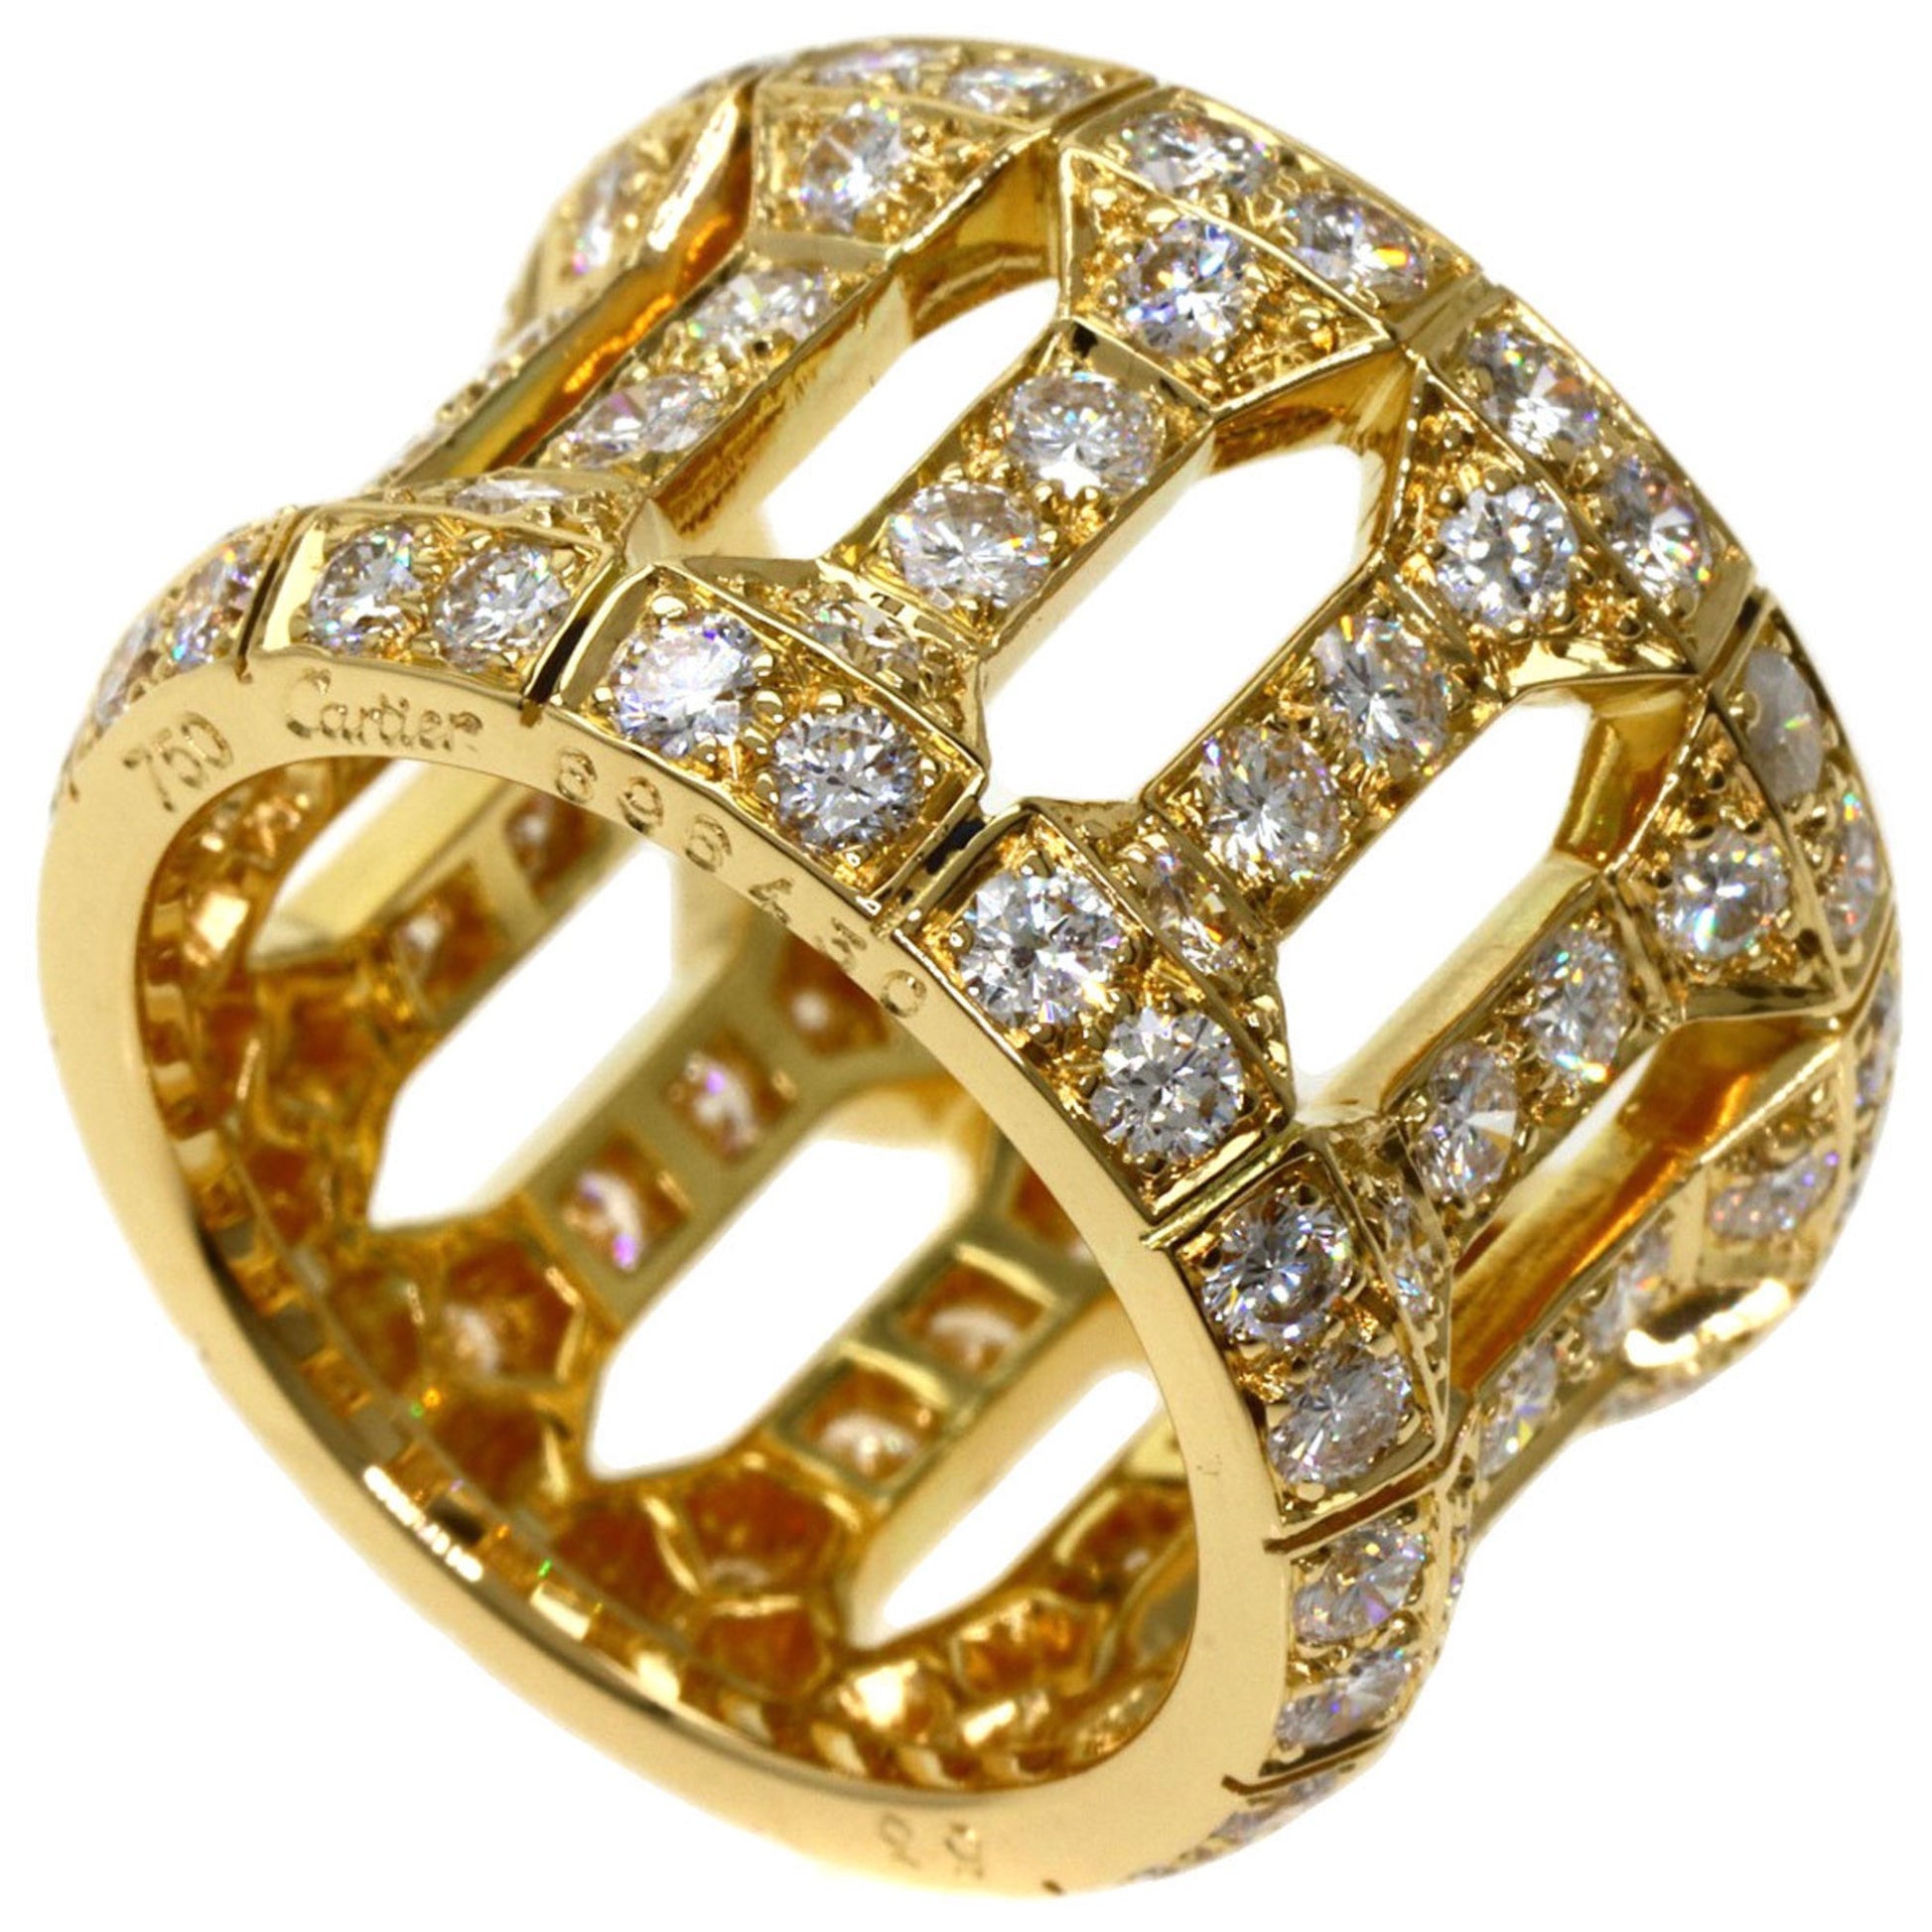 Cartier Antalia Diamond Ring in 18K Yellow Gold